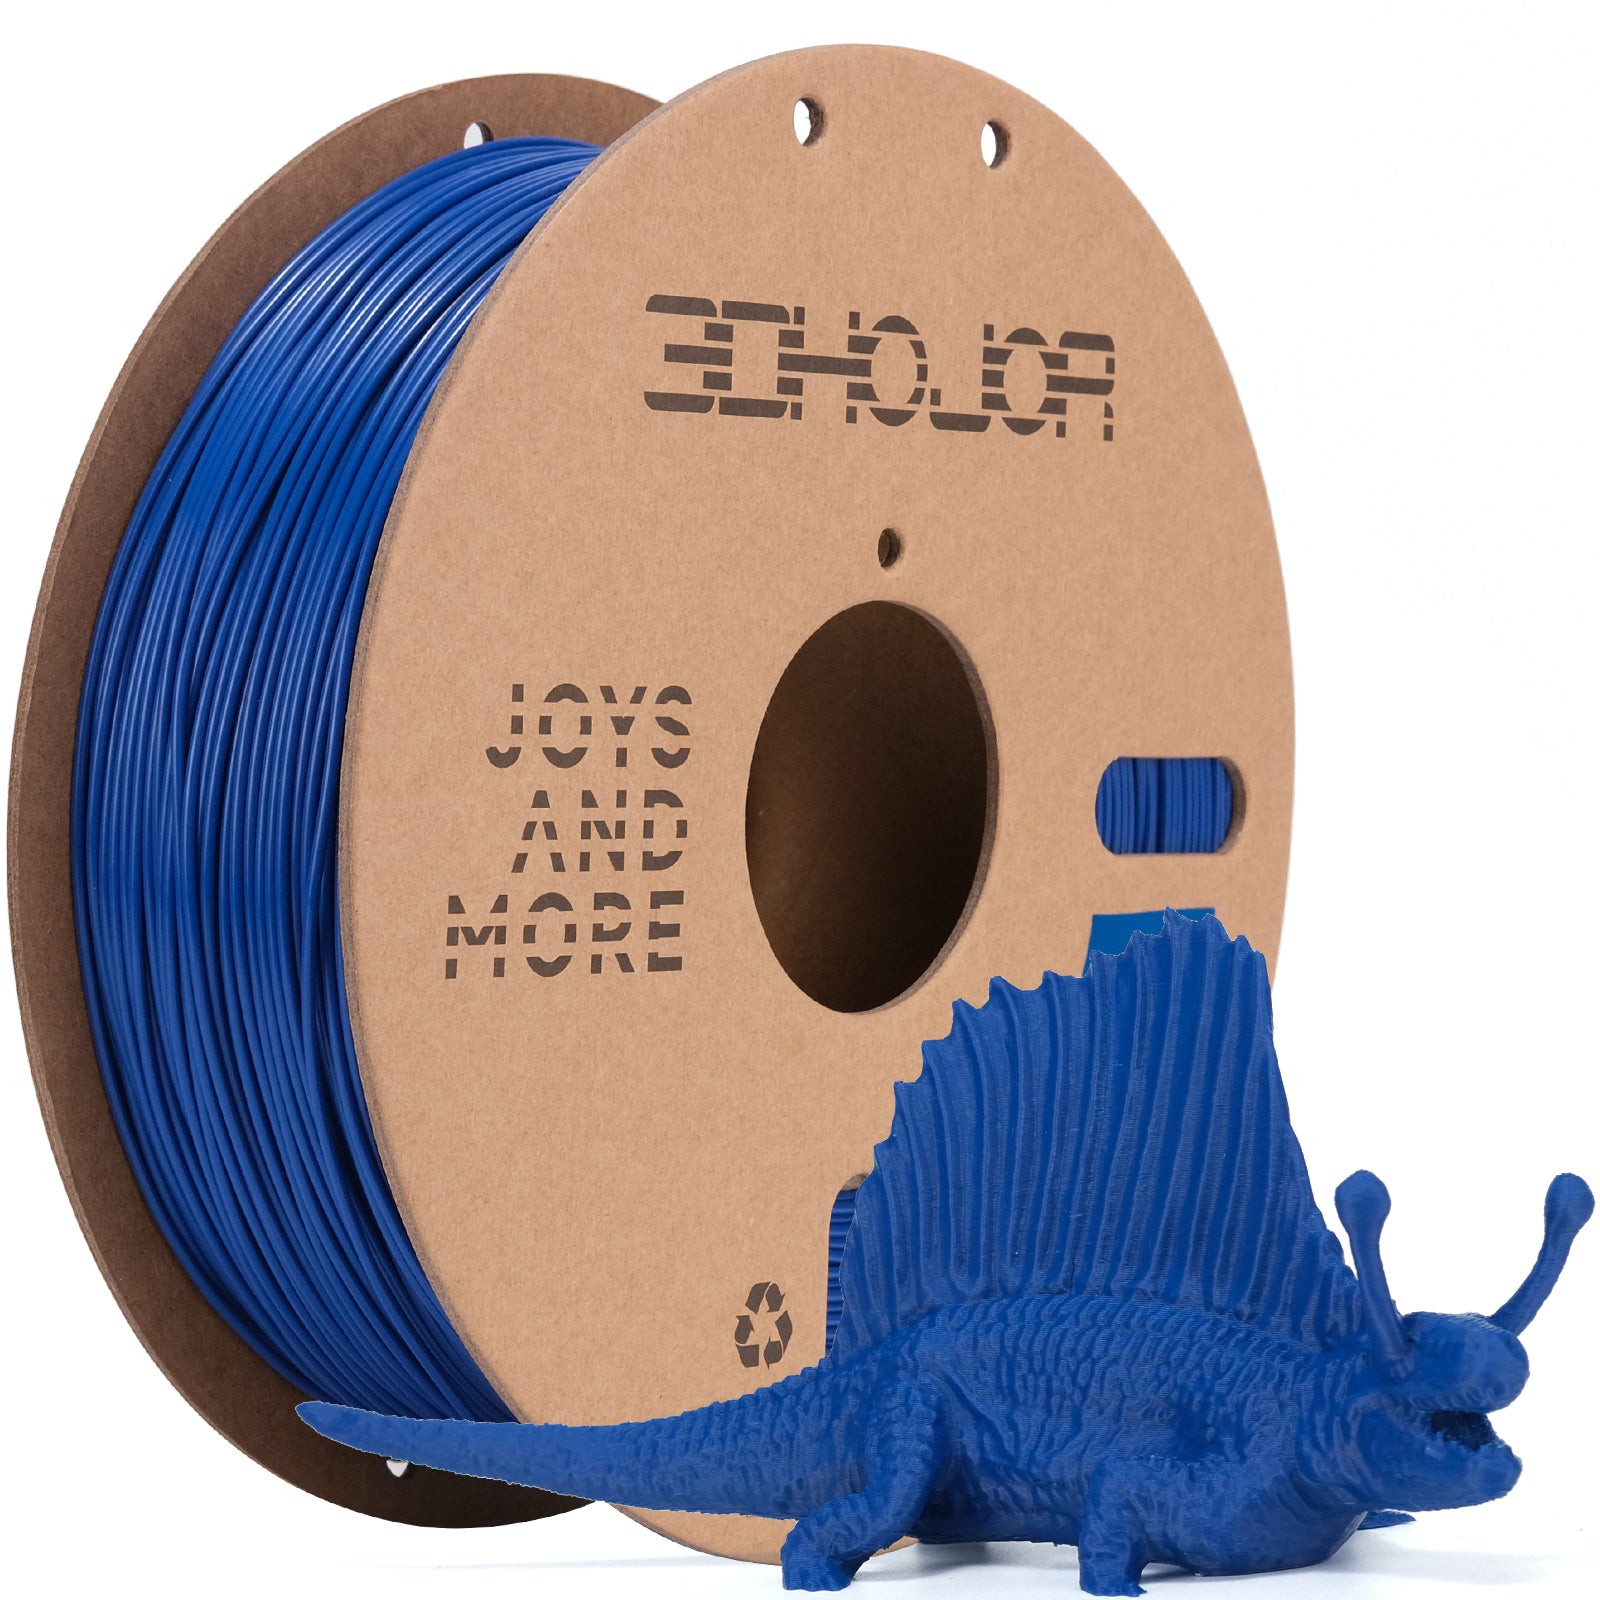 3DHoJor PLA High Speed Printer Filament 1.75mm 1kg Cardboard Spool (2.2lbs) Rapid PLA to 5X Faster Printing Filament PLA Dimensional Accuracy +/- 0.02 mm Fits for Most FDM 3D Printer -Blue